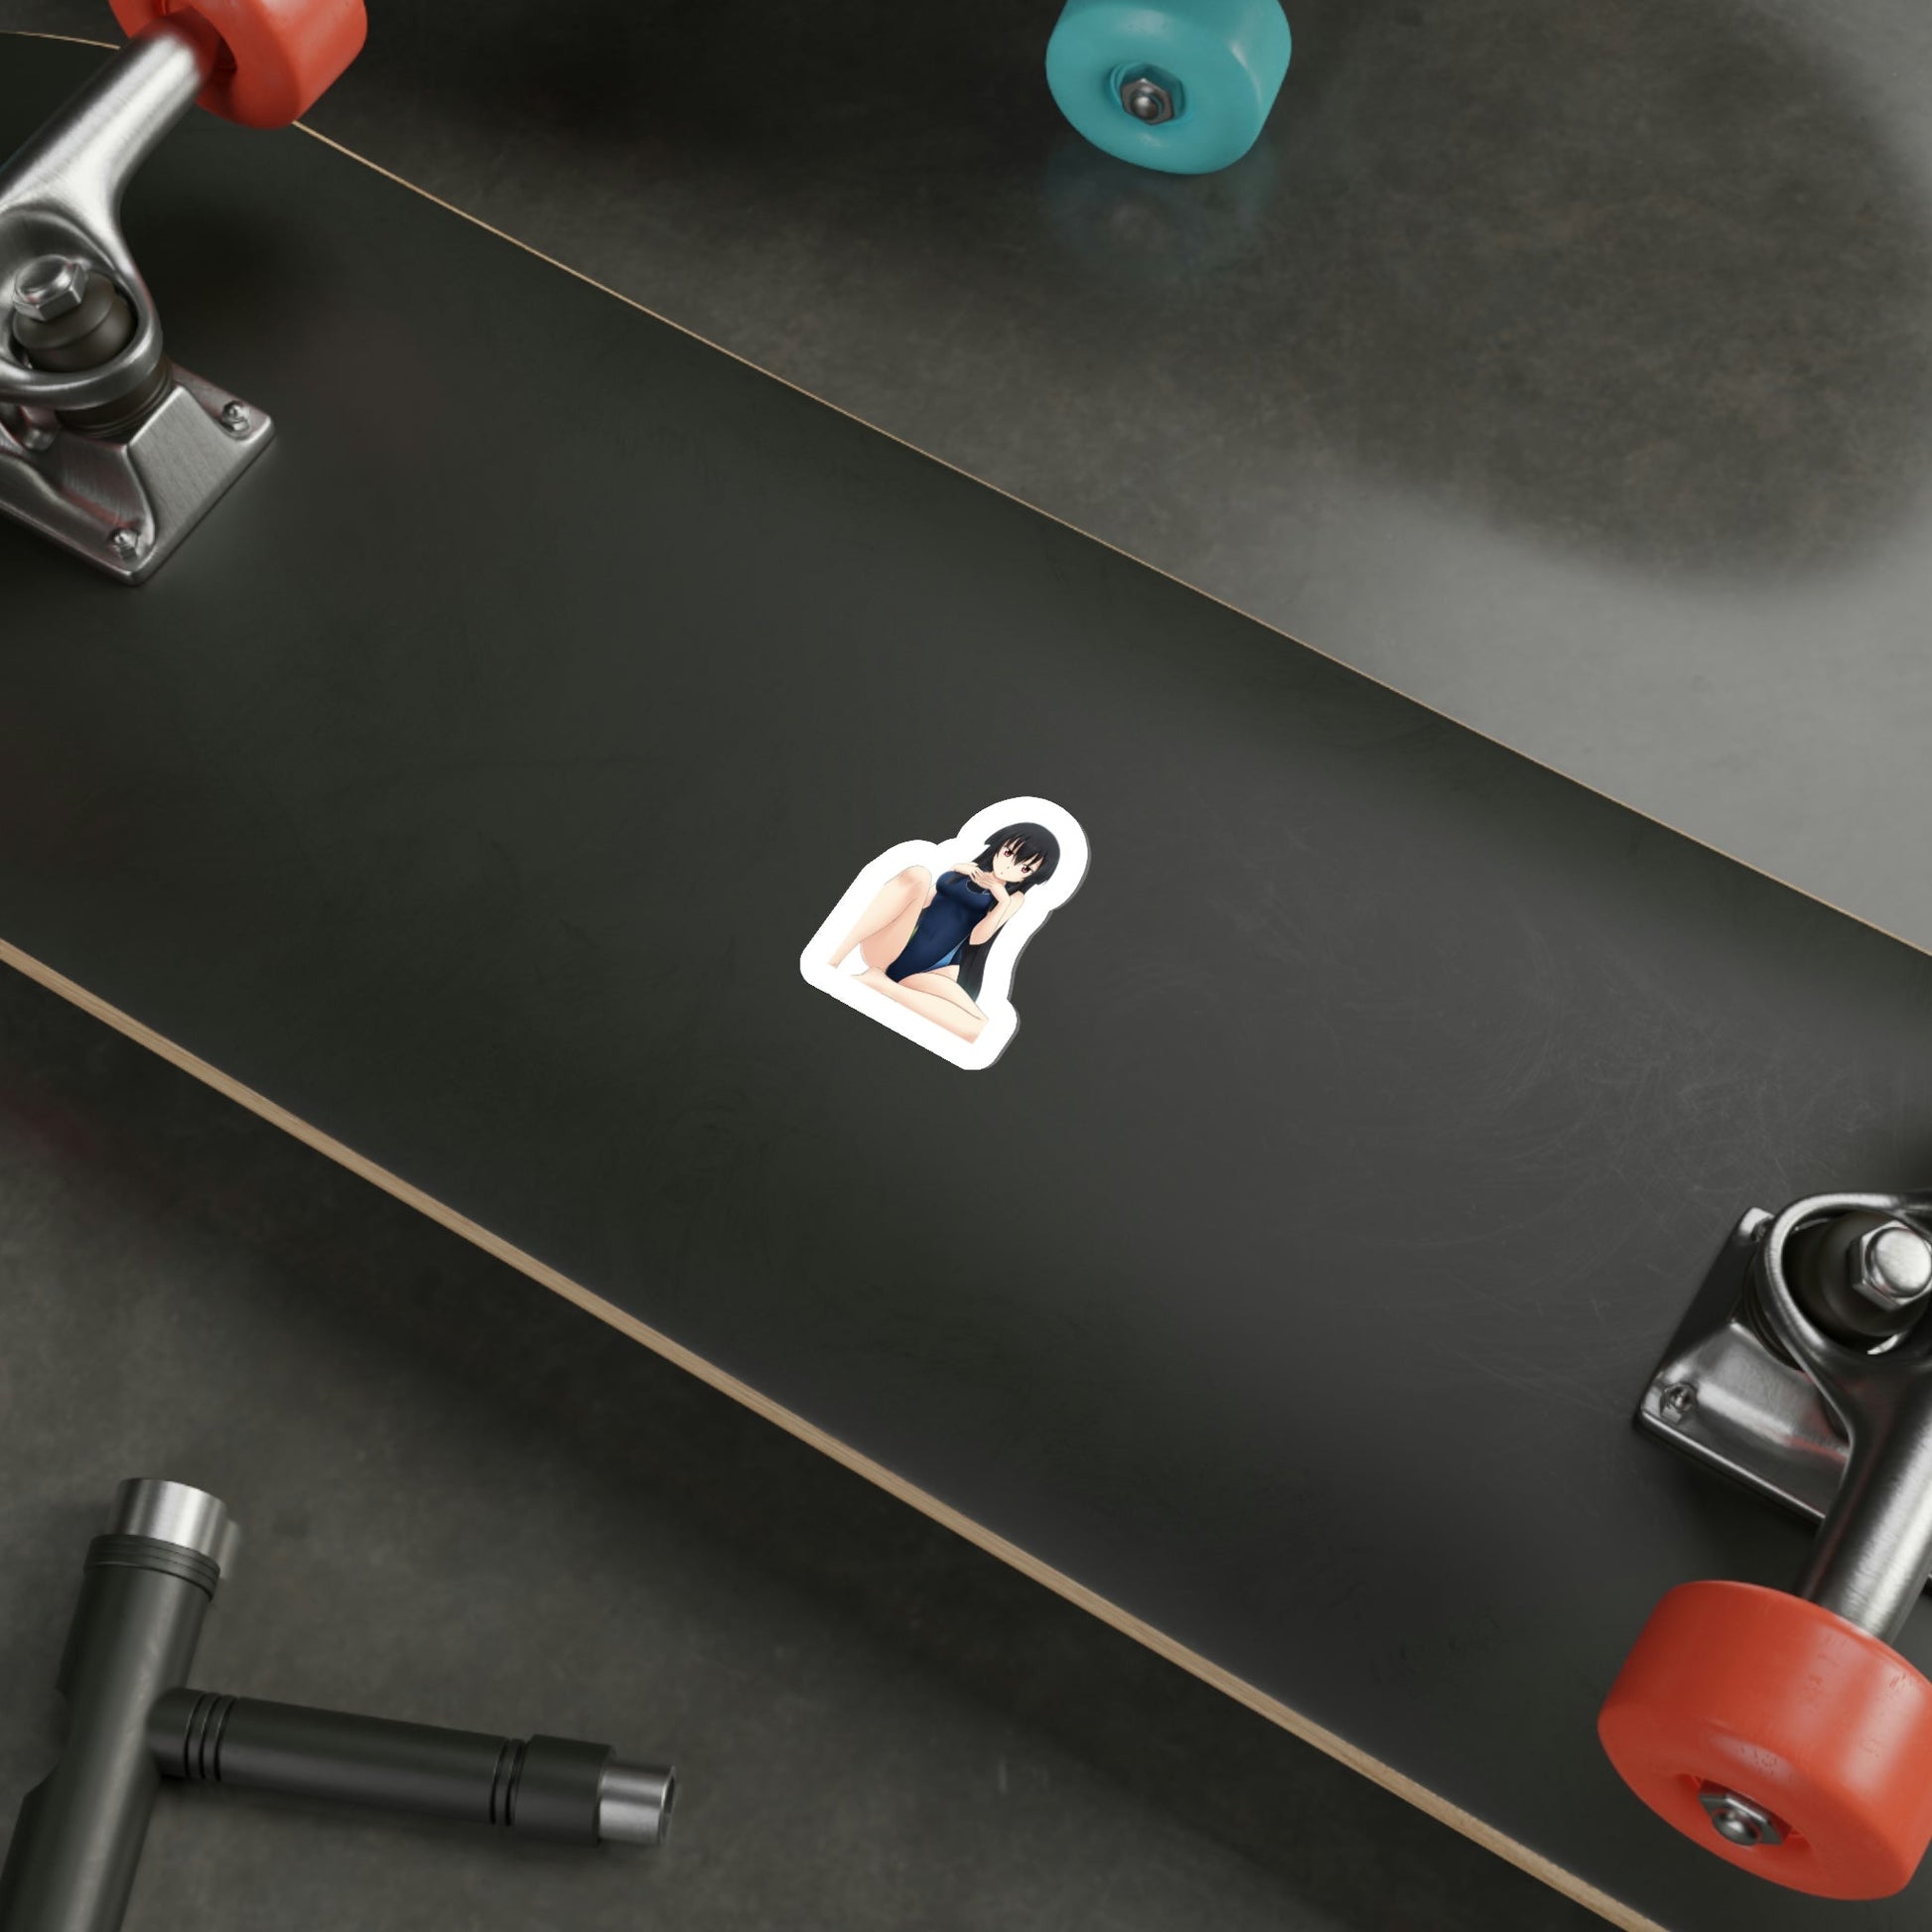  Akame Ga Kill Akame Mine Lubbock Characters Sticker for Phone,  Laptop, Skateboard, Car : Electronics